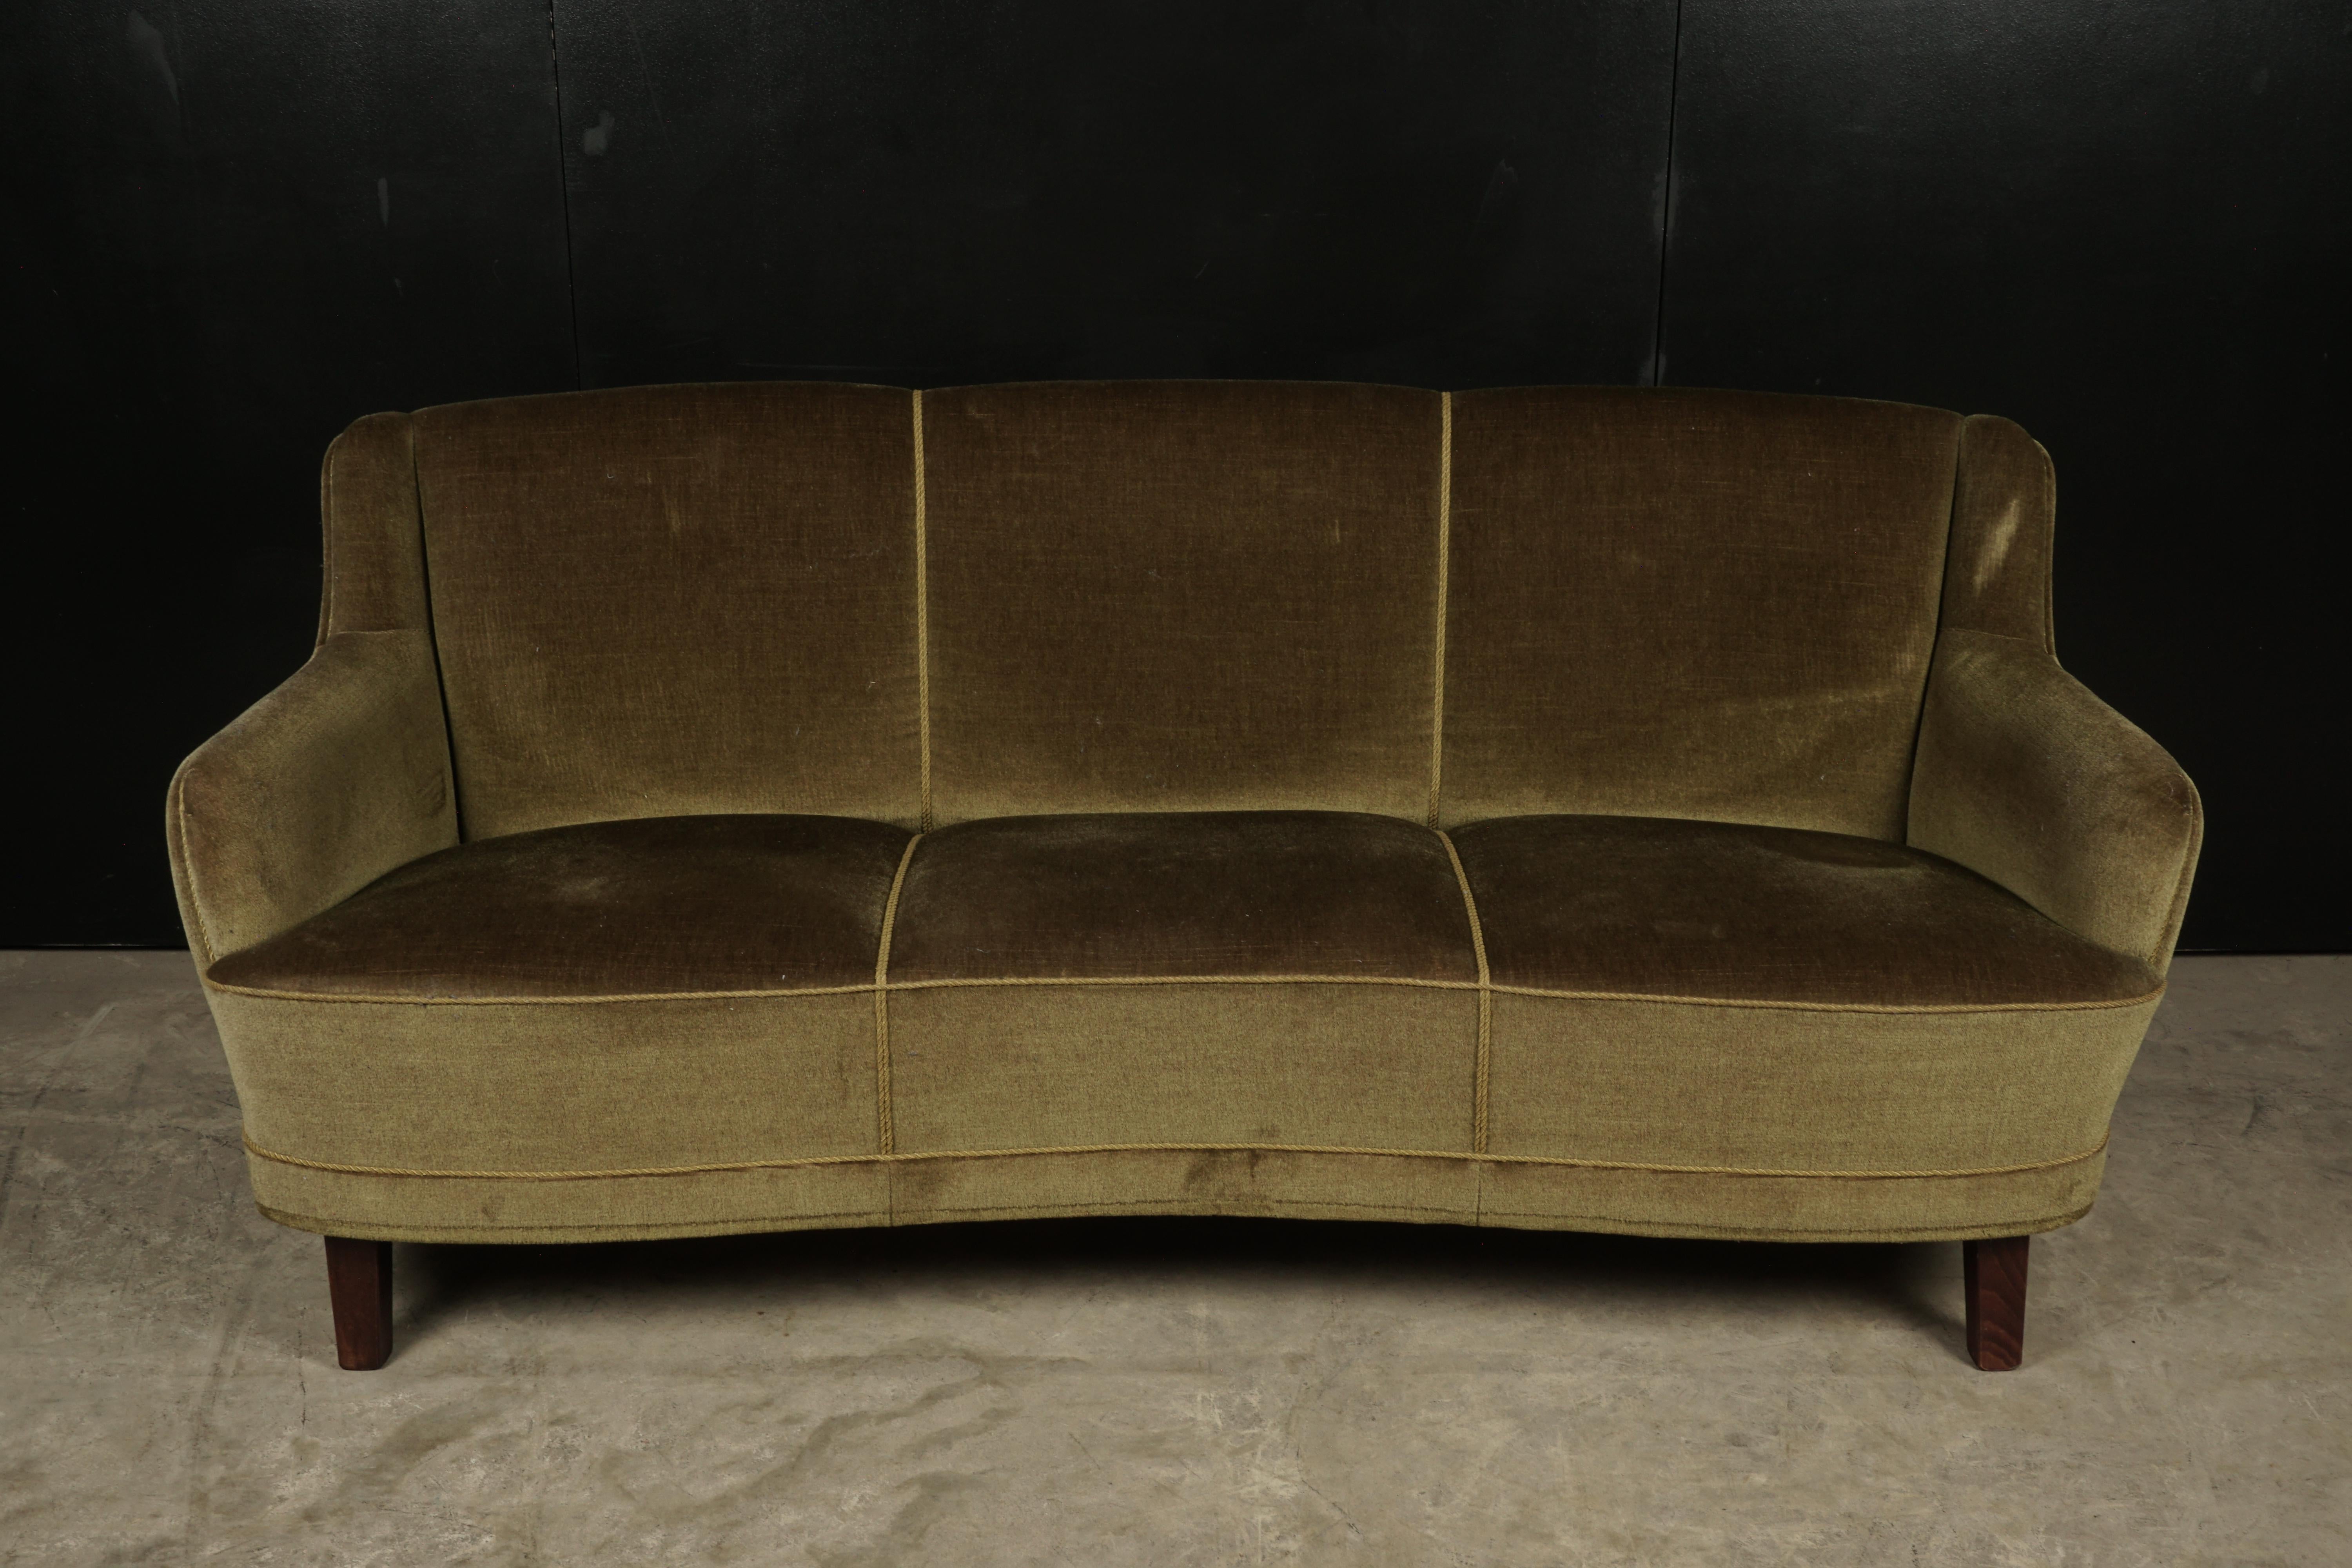 Midcentury curved sofa from Denmark, circa 1950. Original green velour upholstery.